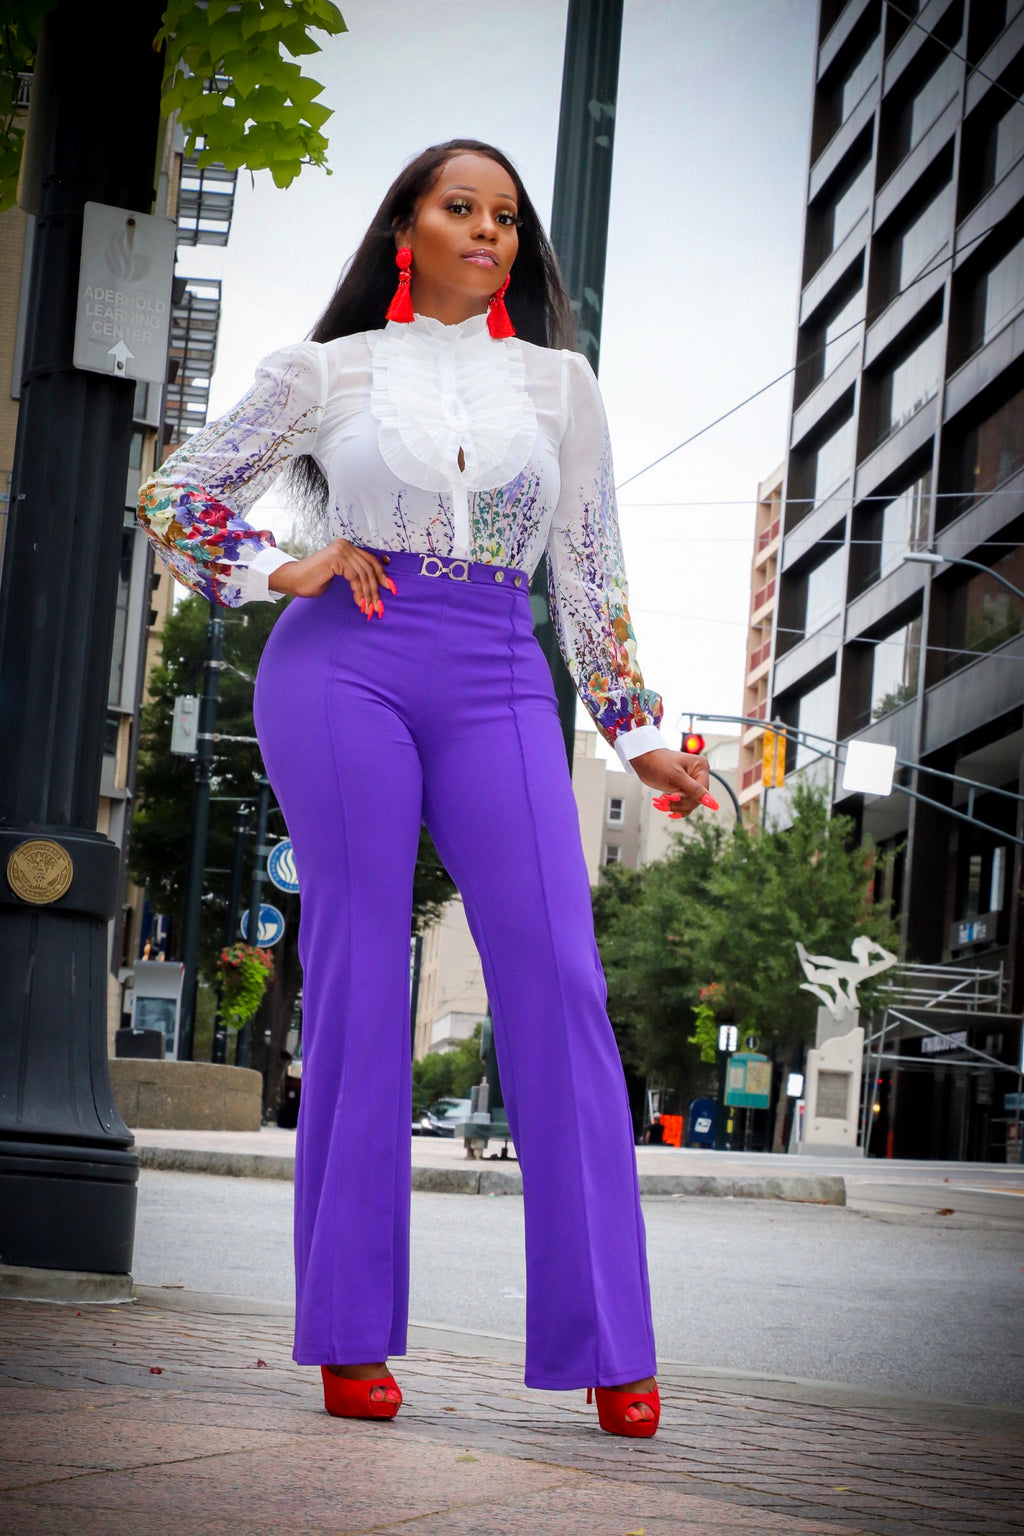 Saracha Purple High Waist Stretch Fit Pants - A' LA' POSH Clothing